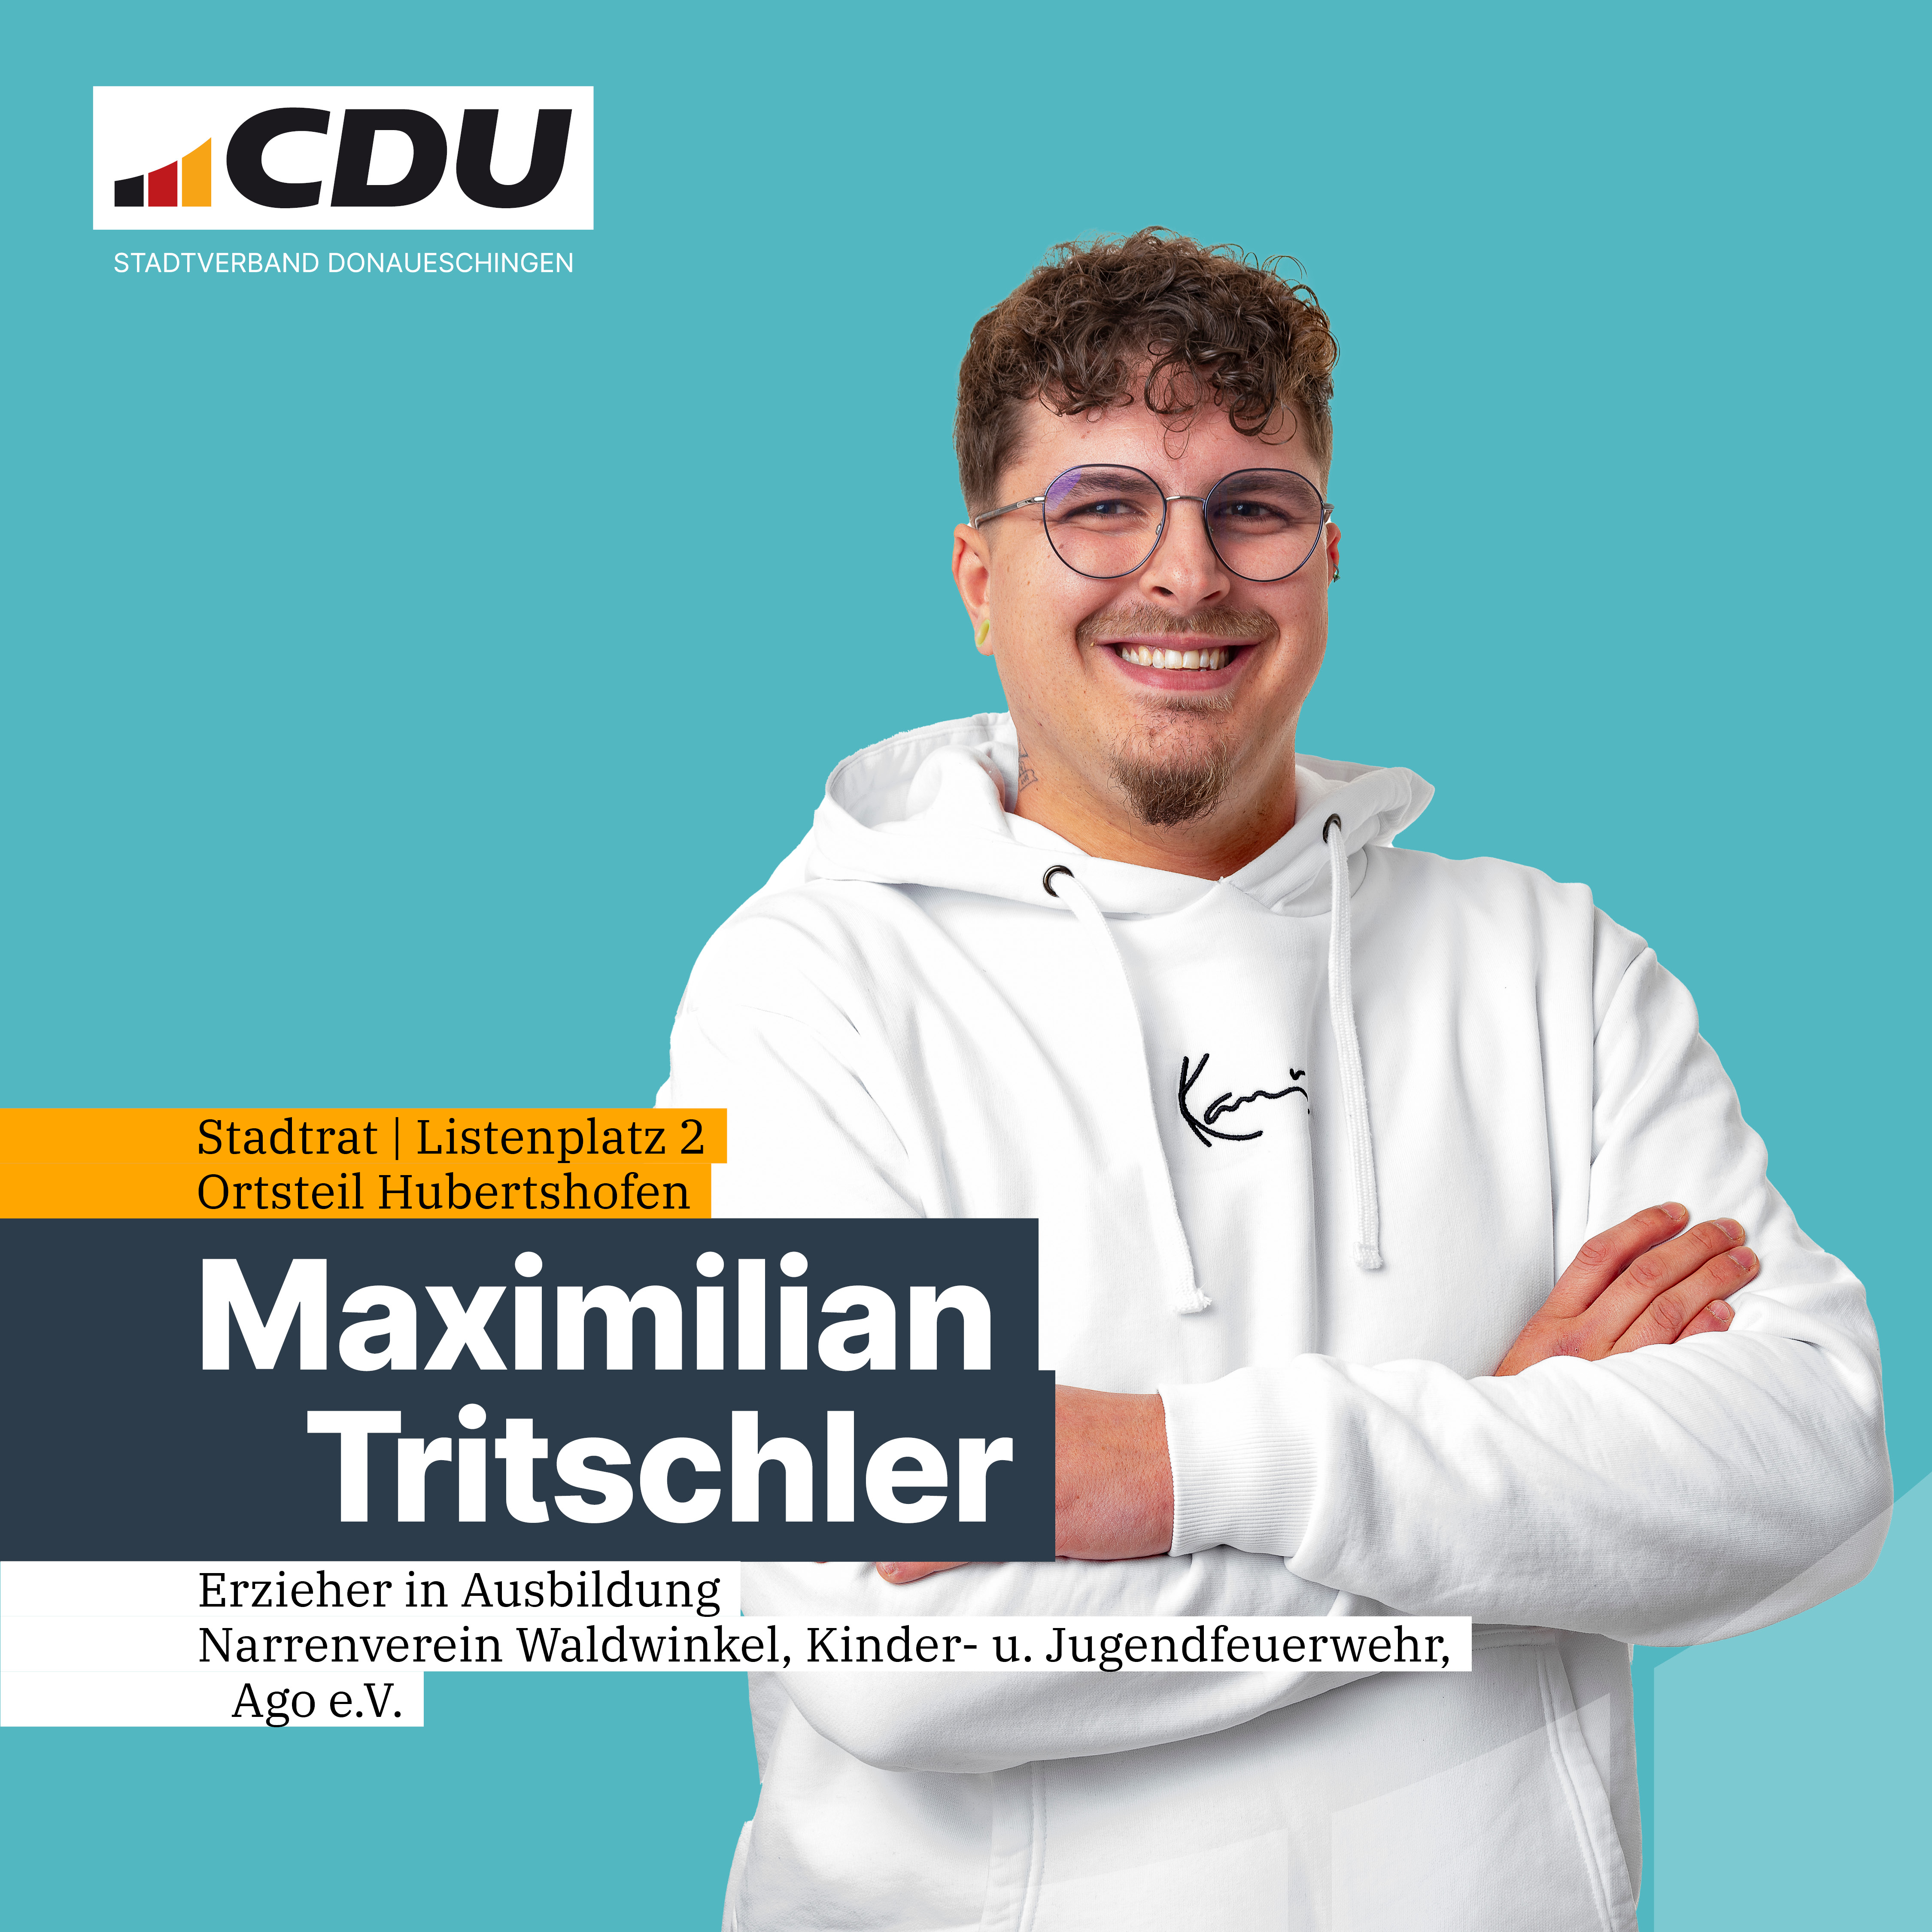  Maximilian Tritschler